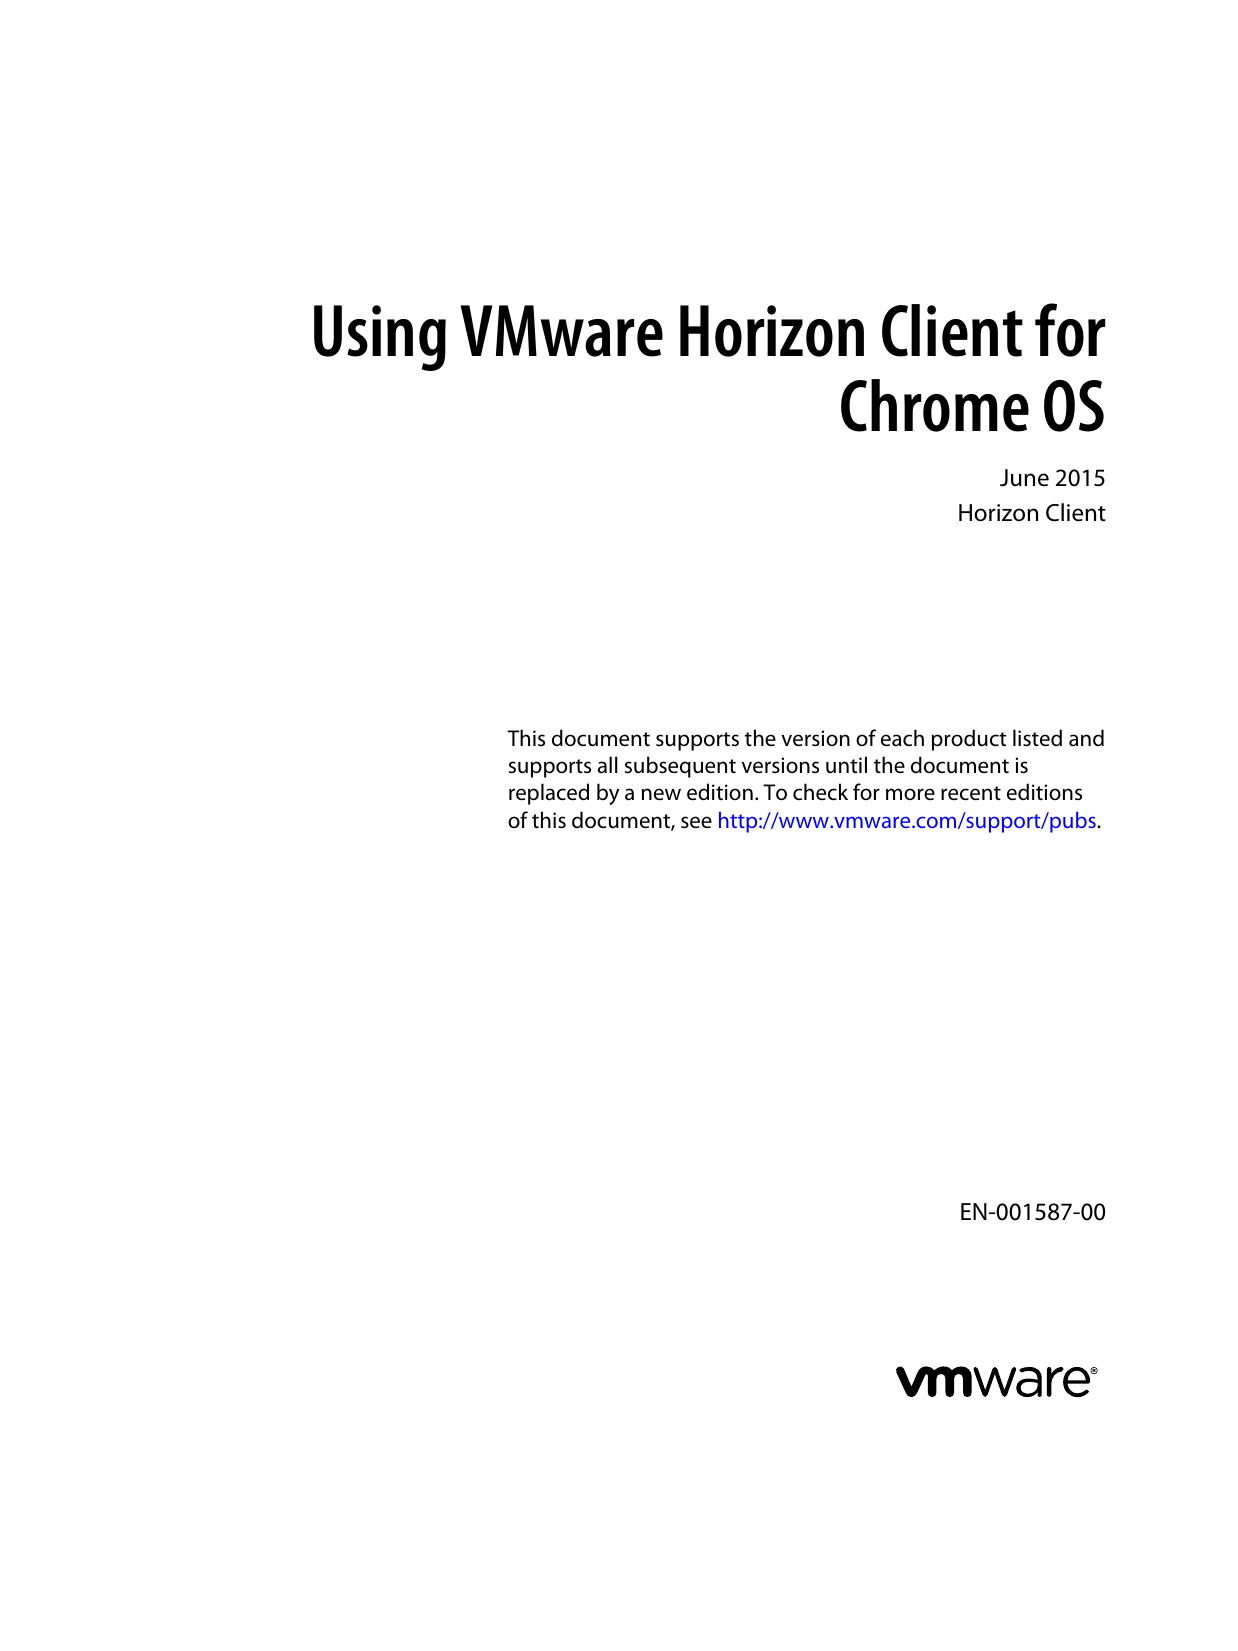 horizon client for chrome